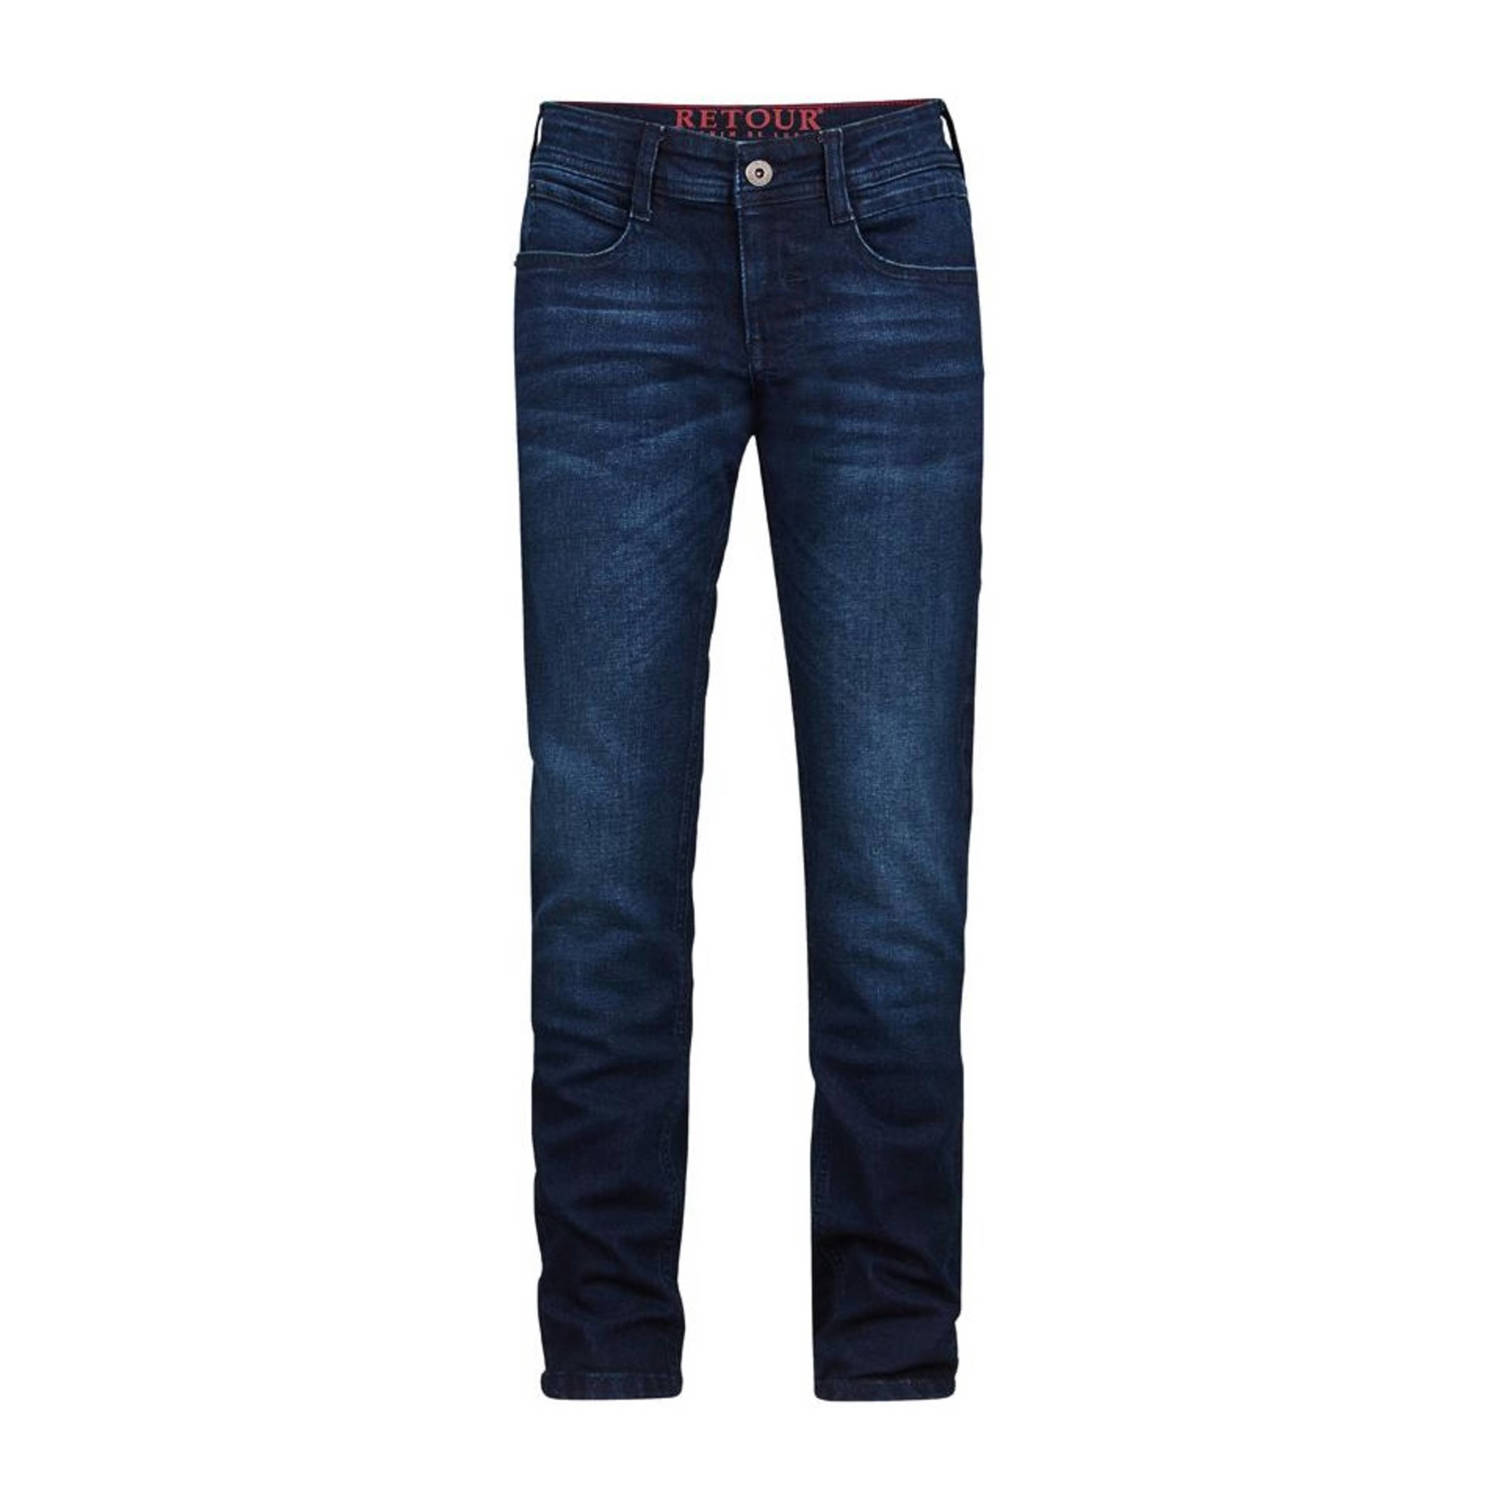 Retour Jeans tapered fit jeans Wyatt dark blue denim Blauw Jongens Stretchdenim 116